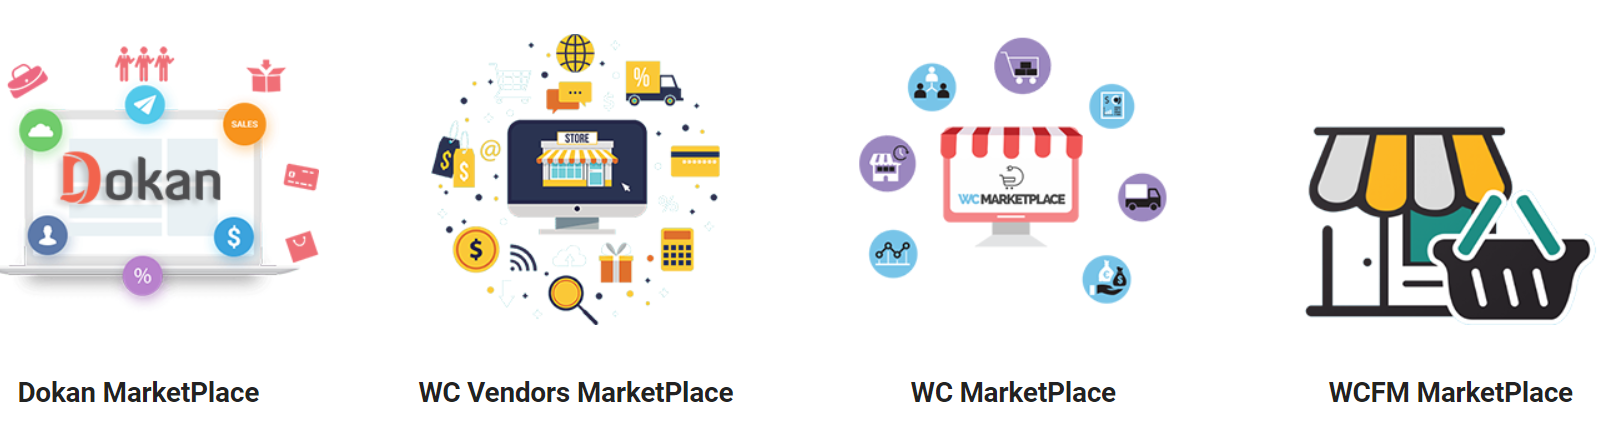 eMarket 主题与顶级多供应商市场插件完全兼容